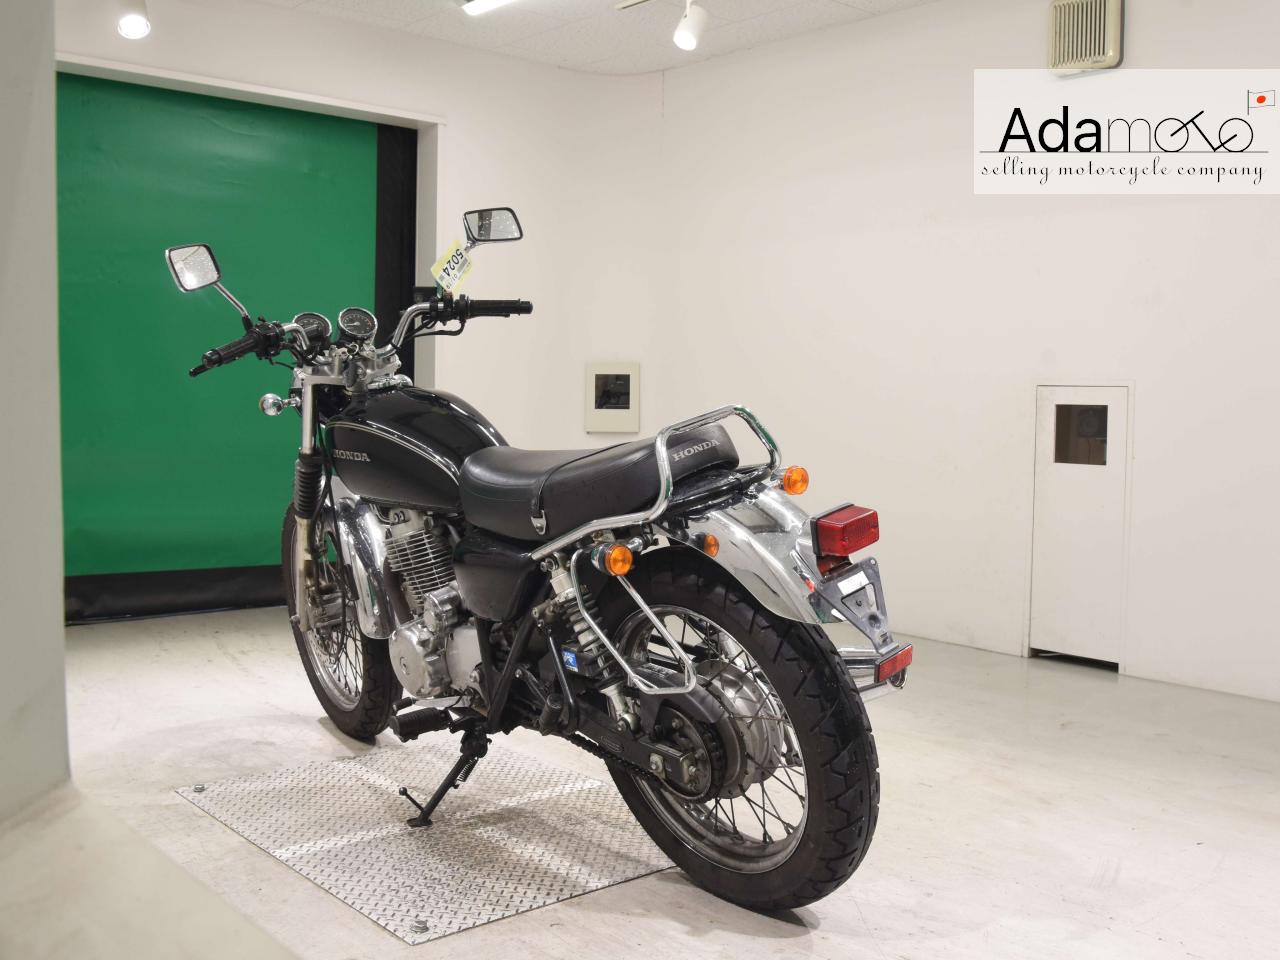 Honda CB400SS E - Adamoto - Motorcycles from Japan